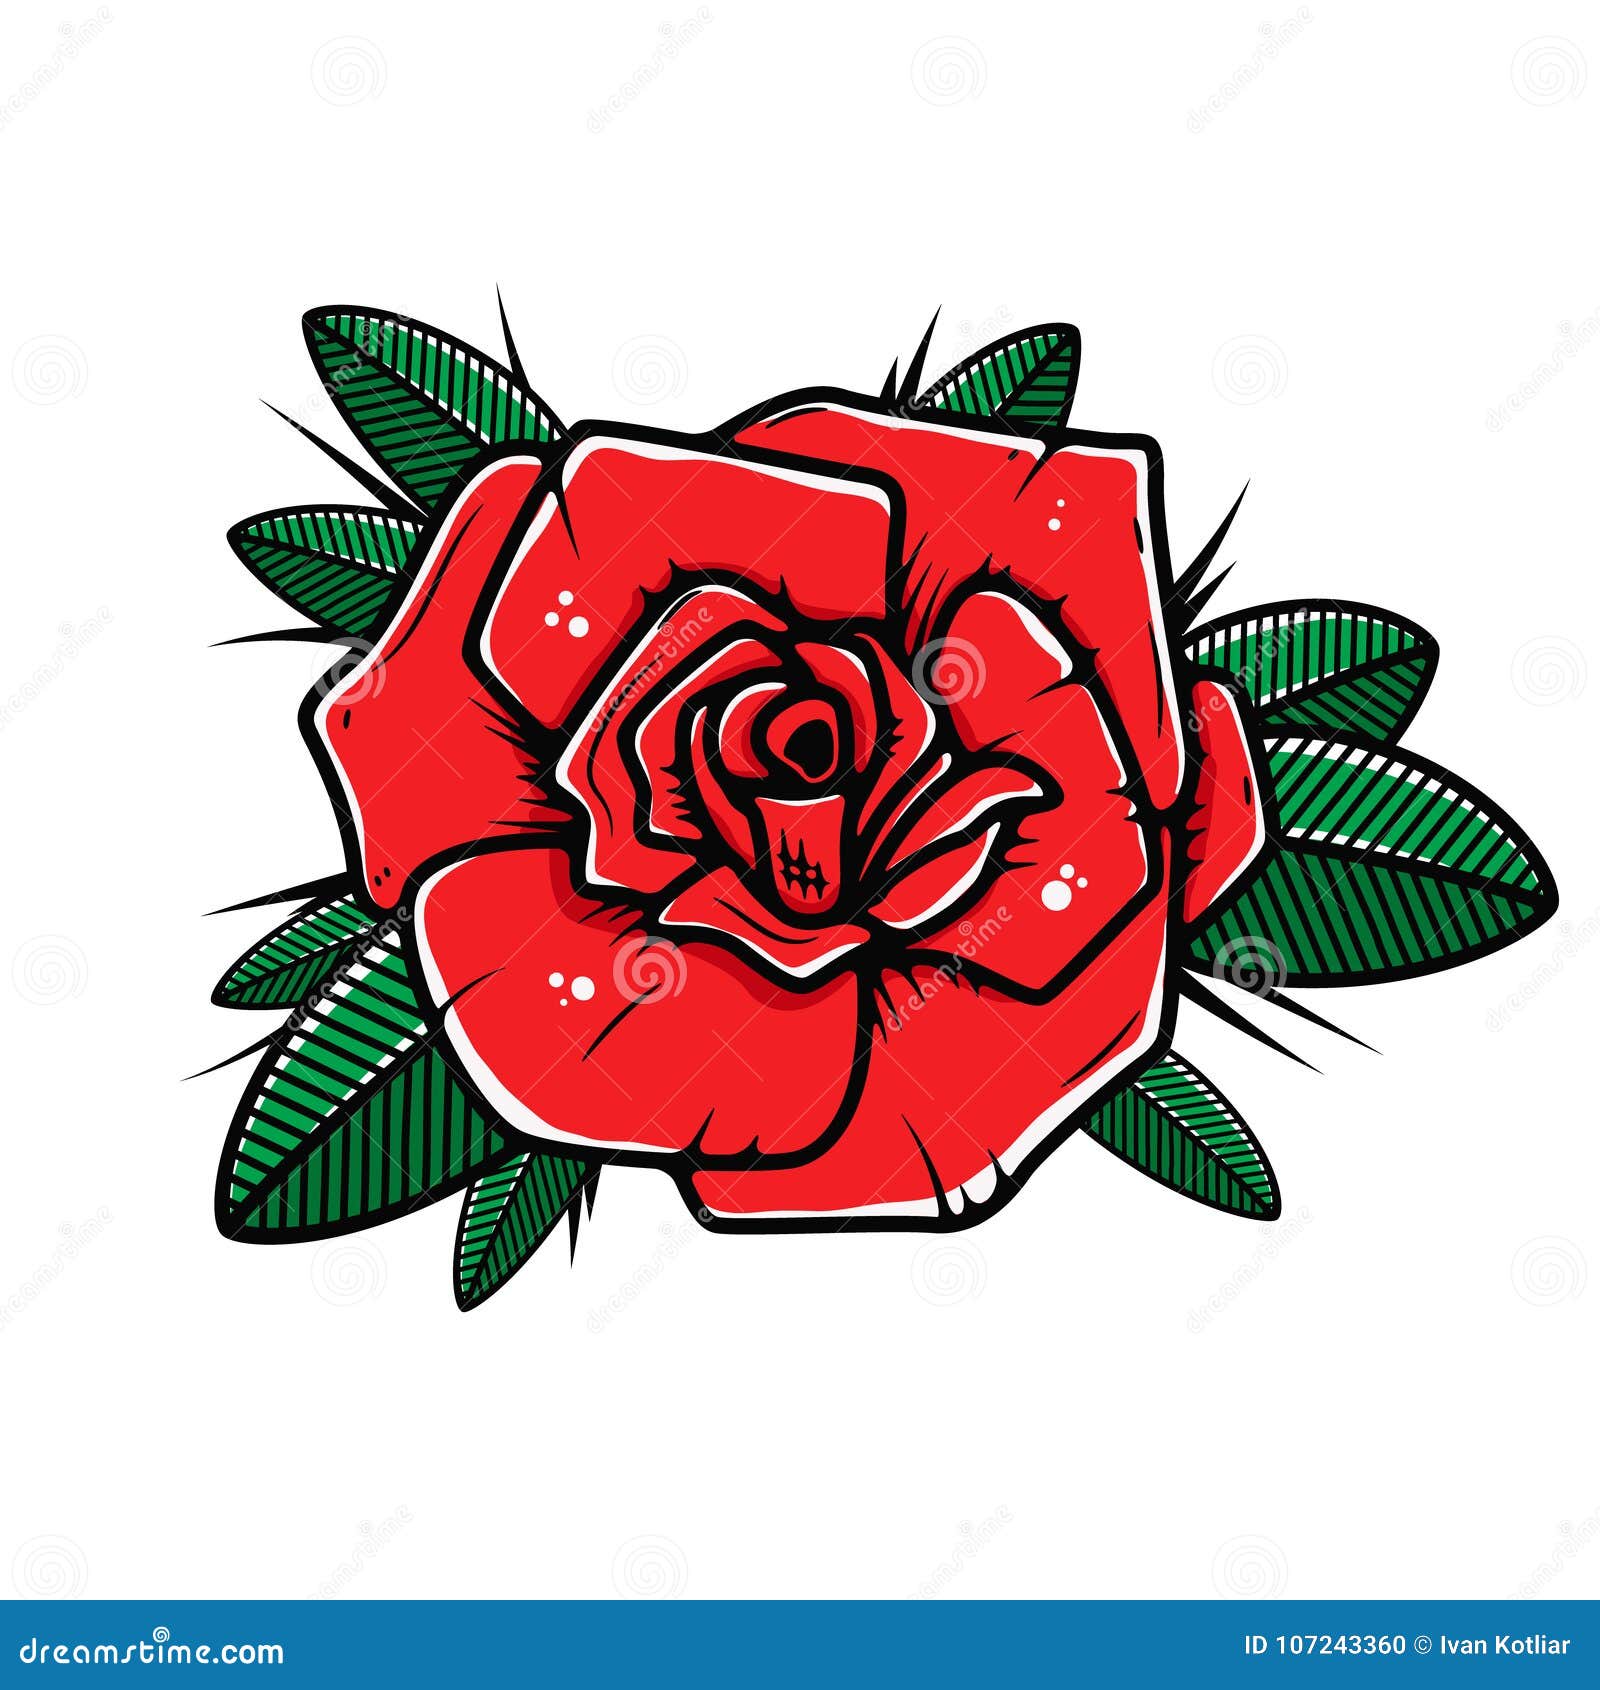 Black Outline Rose With True Love Banner Tattoo Design